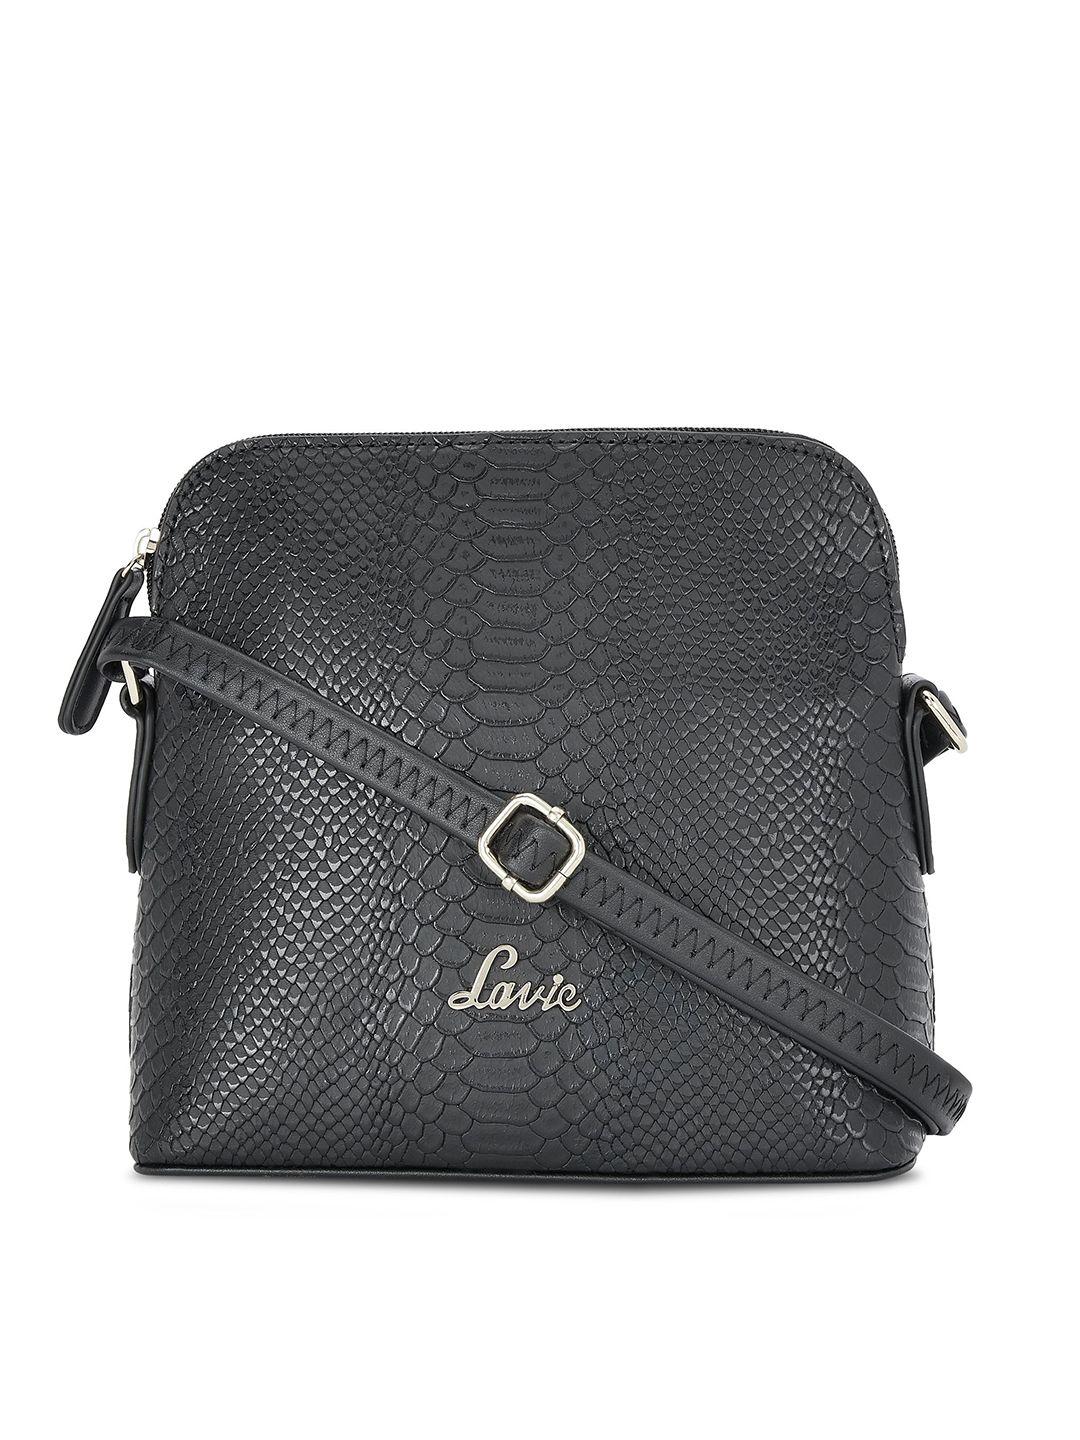 lavie black textured sling bag